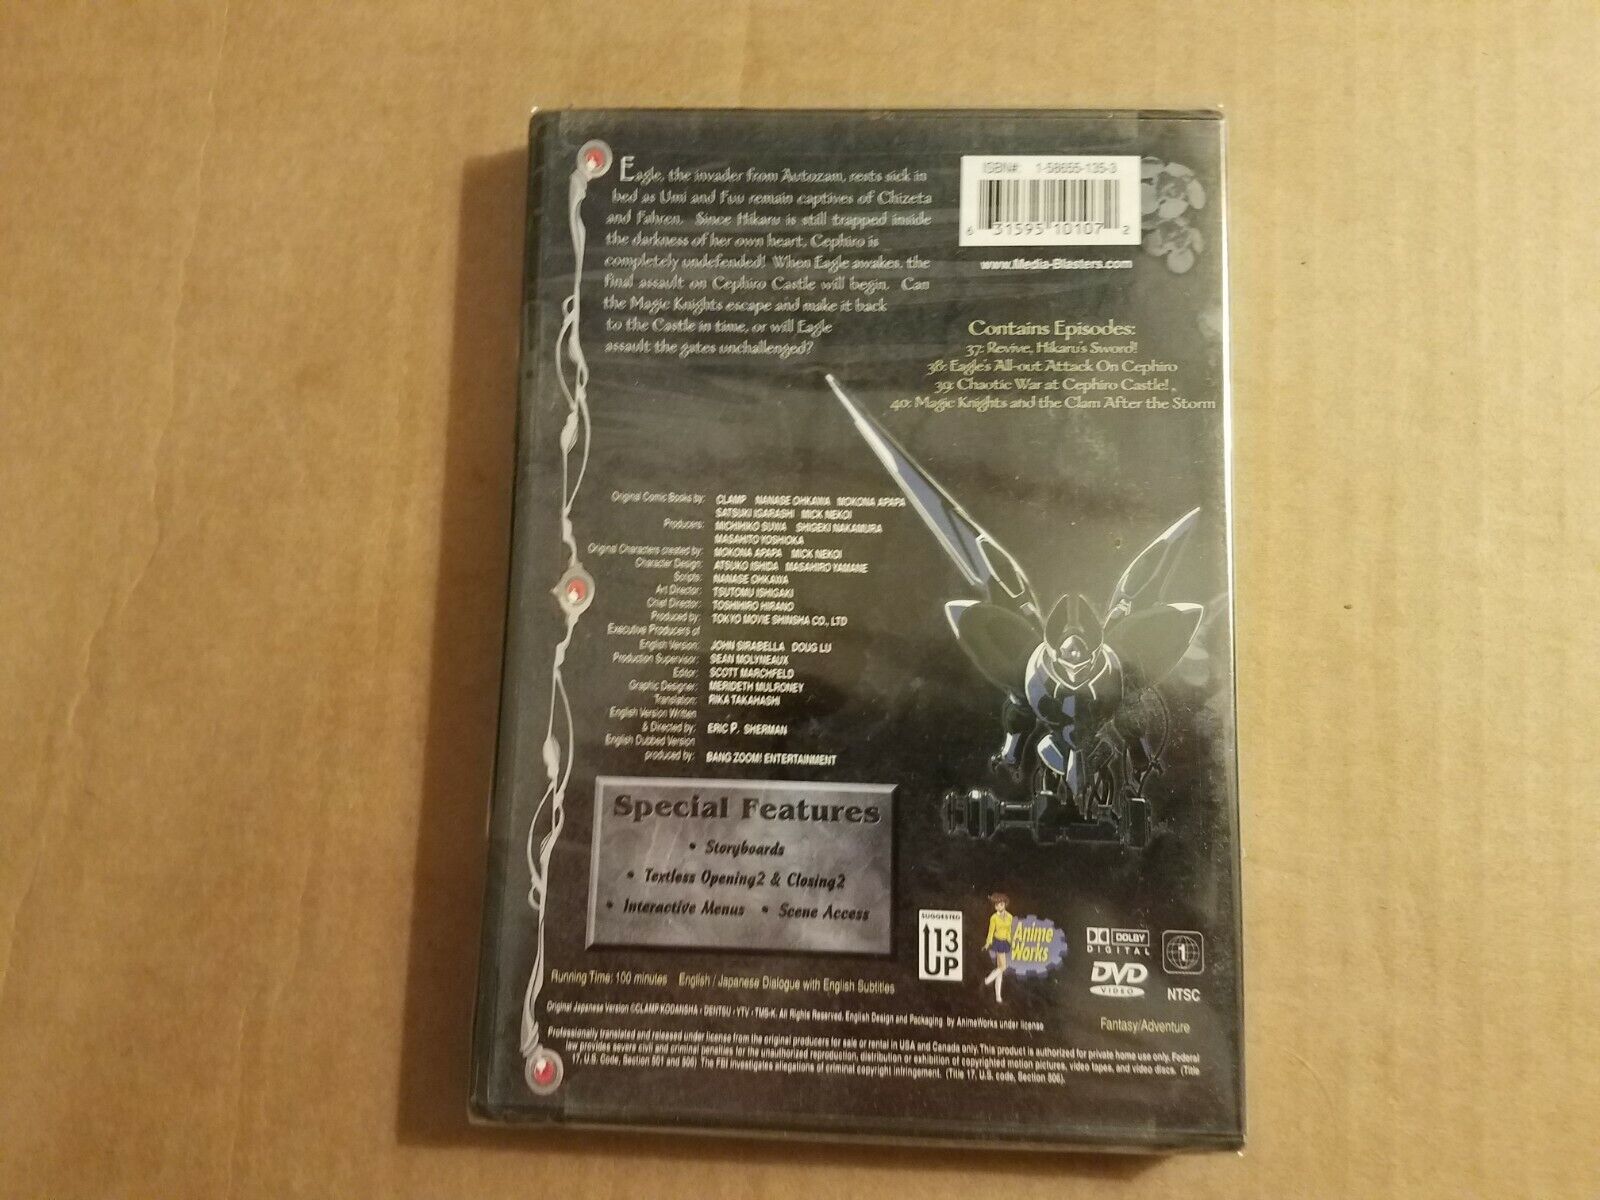 Magic Knight Rayearth 2 Vol. 5 - Sleep (DVD, 2003) for sale online